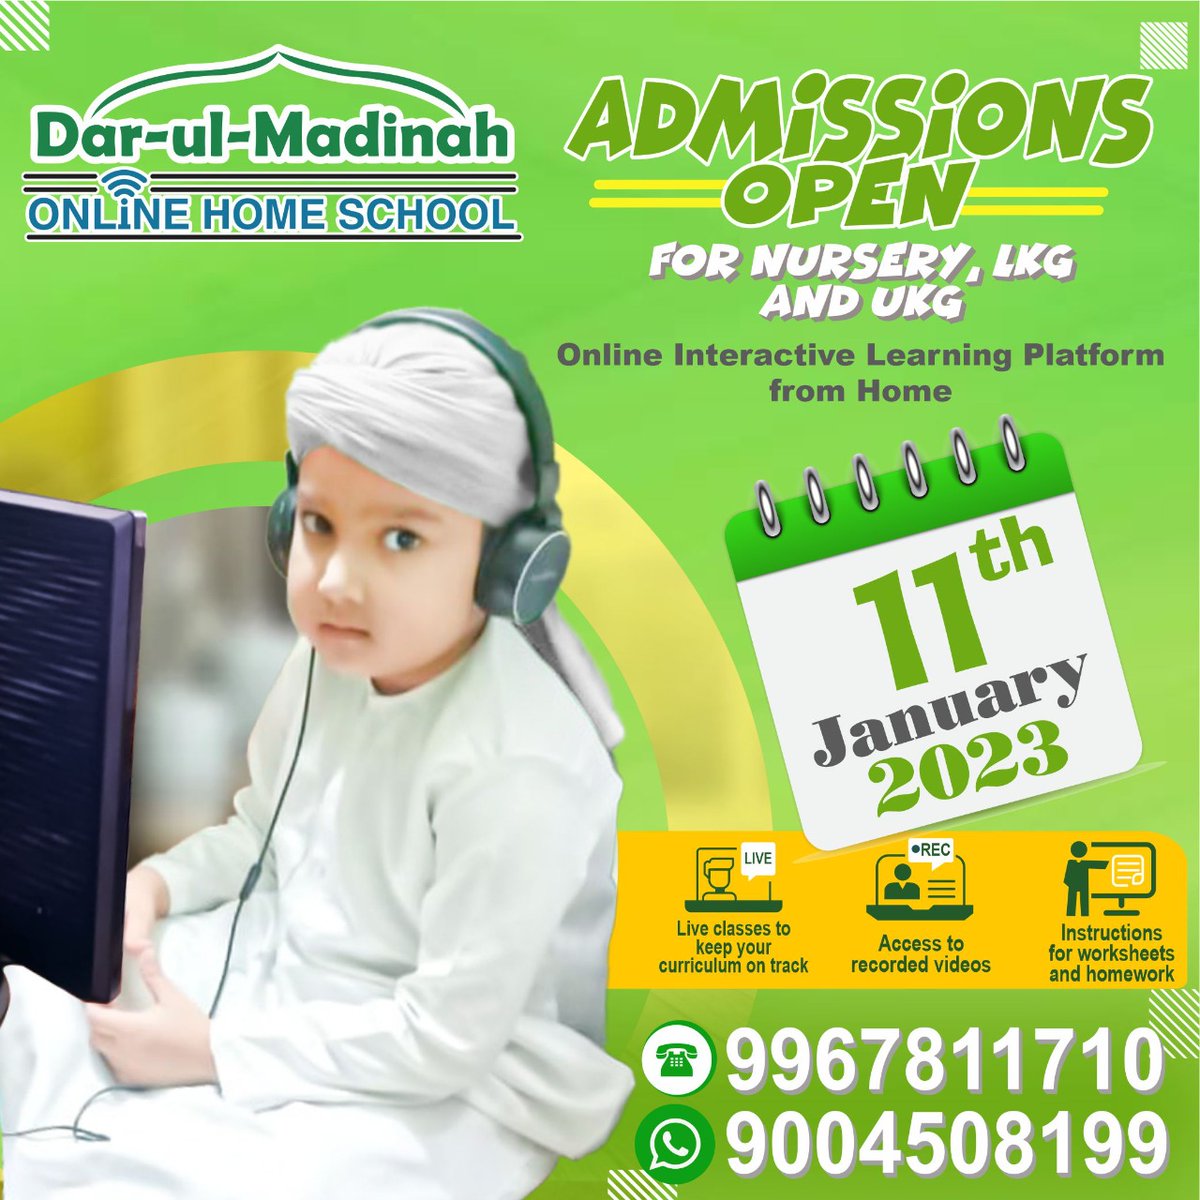 Dar-ul-Madinah Online Home School Admissions Open.
.
.
.
#onlinehomeschool #admissionsopen #nursery #nurseryadmissions #onlineschooling #education #darulmadinah